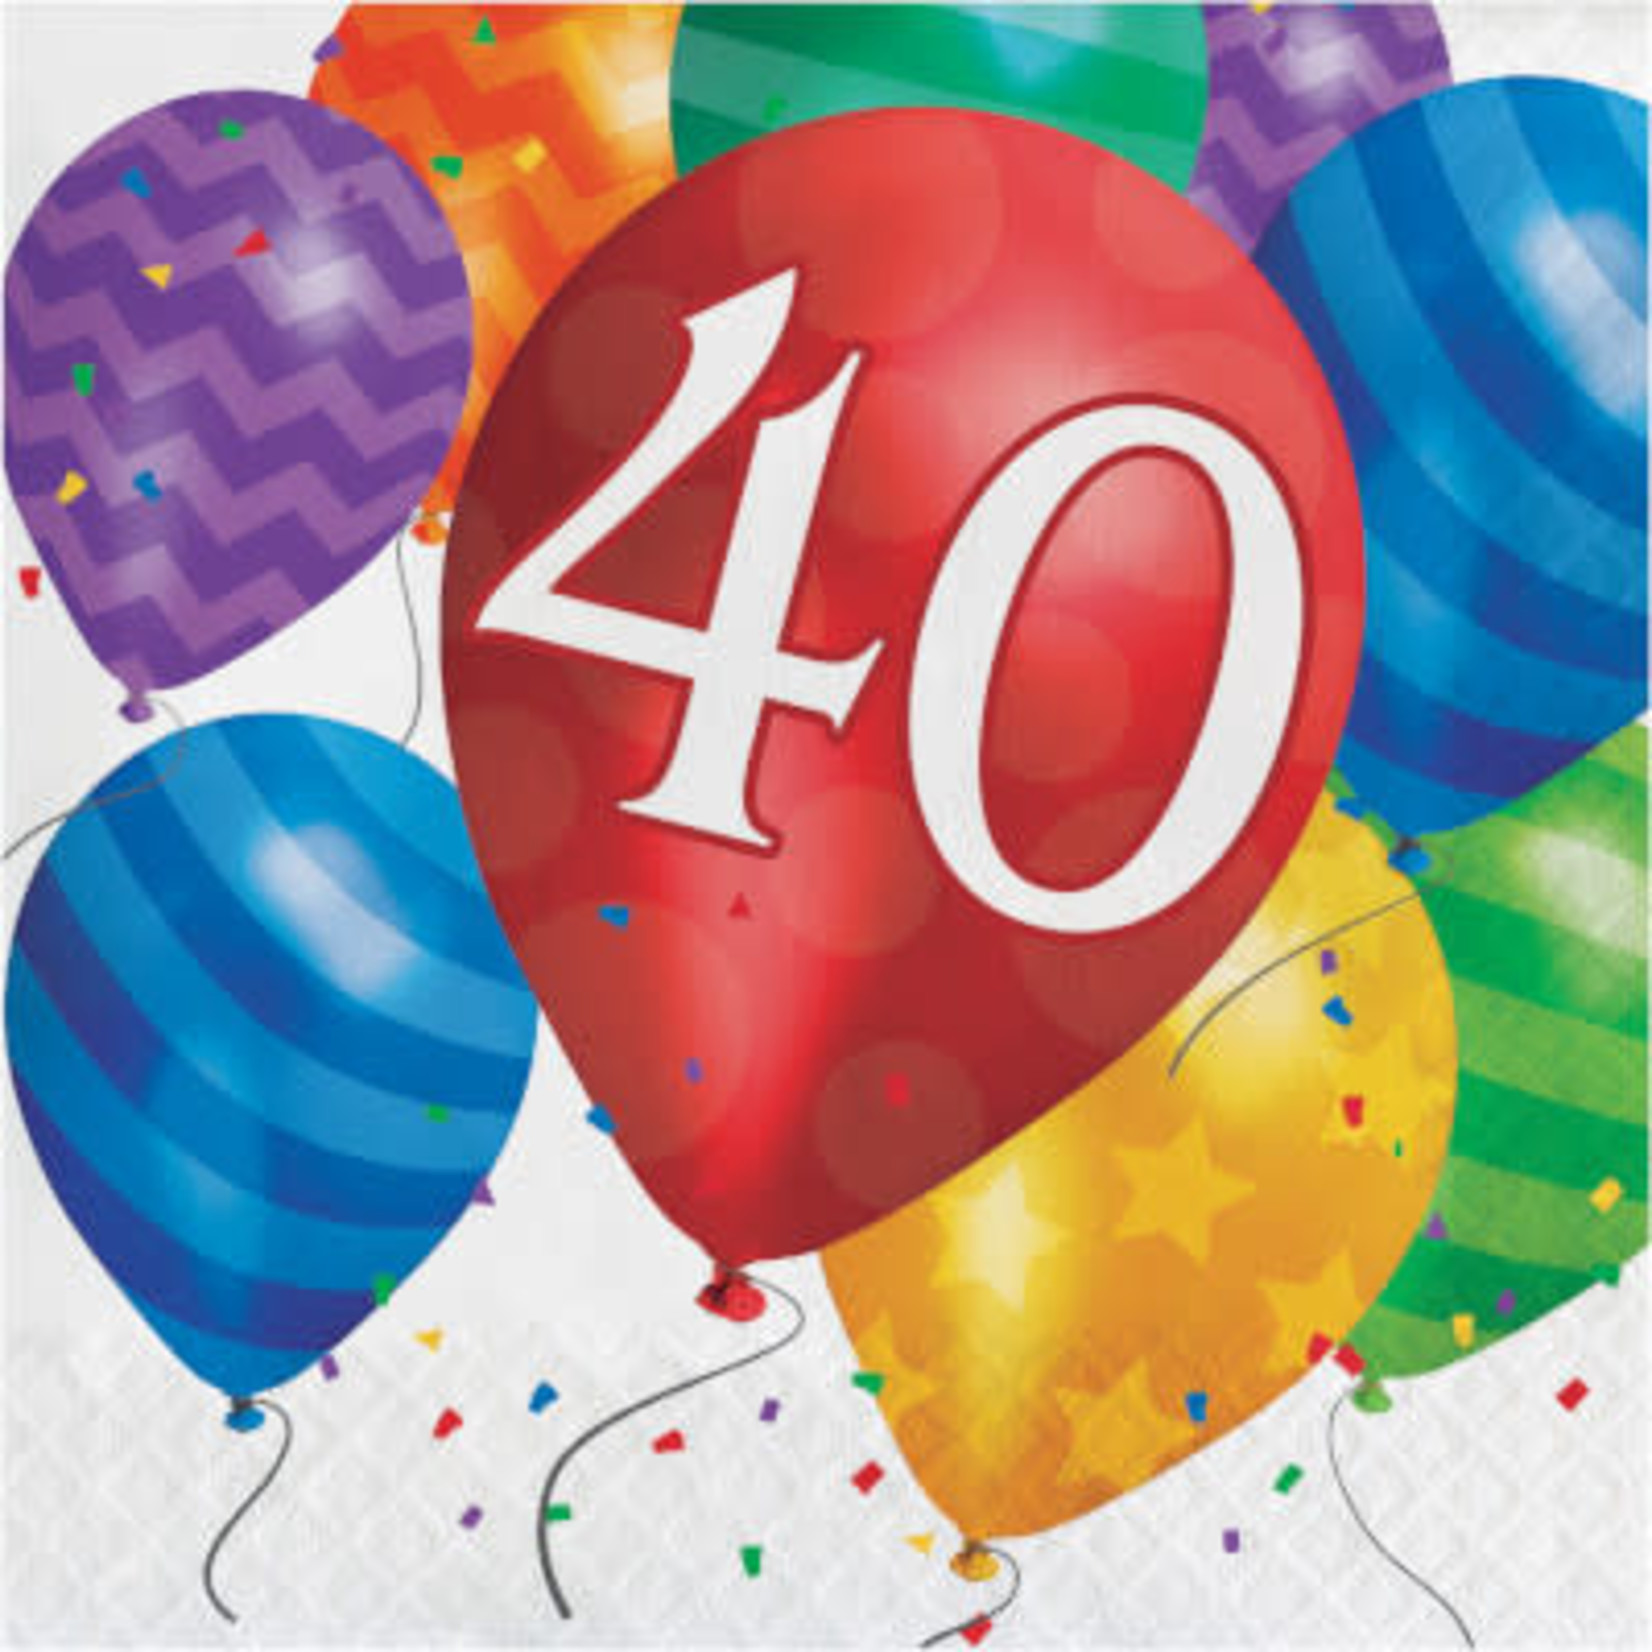 Creative Converting Balloon Blast 40th Birthday Lunch Napkins - 16ct.